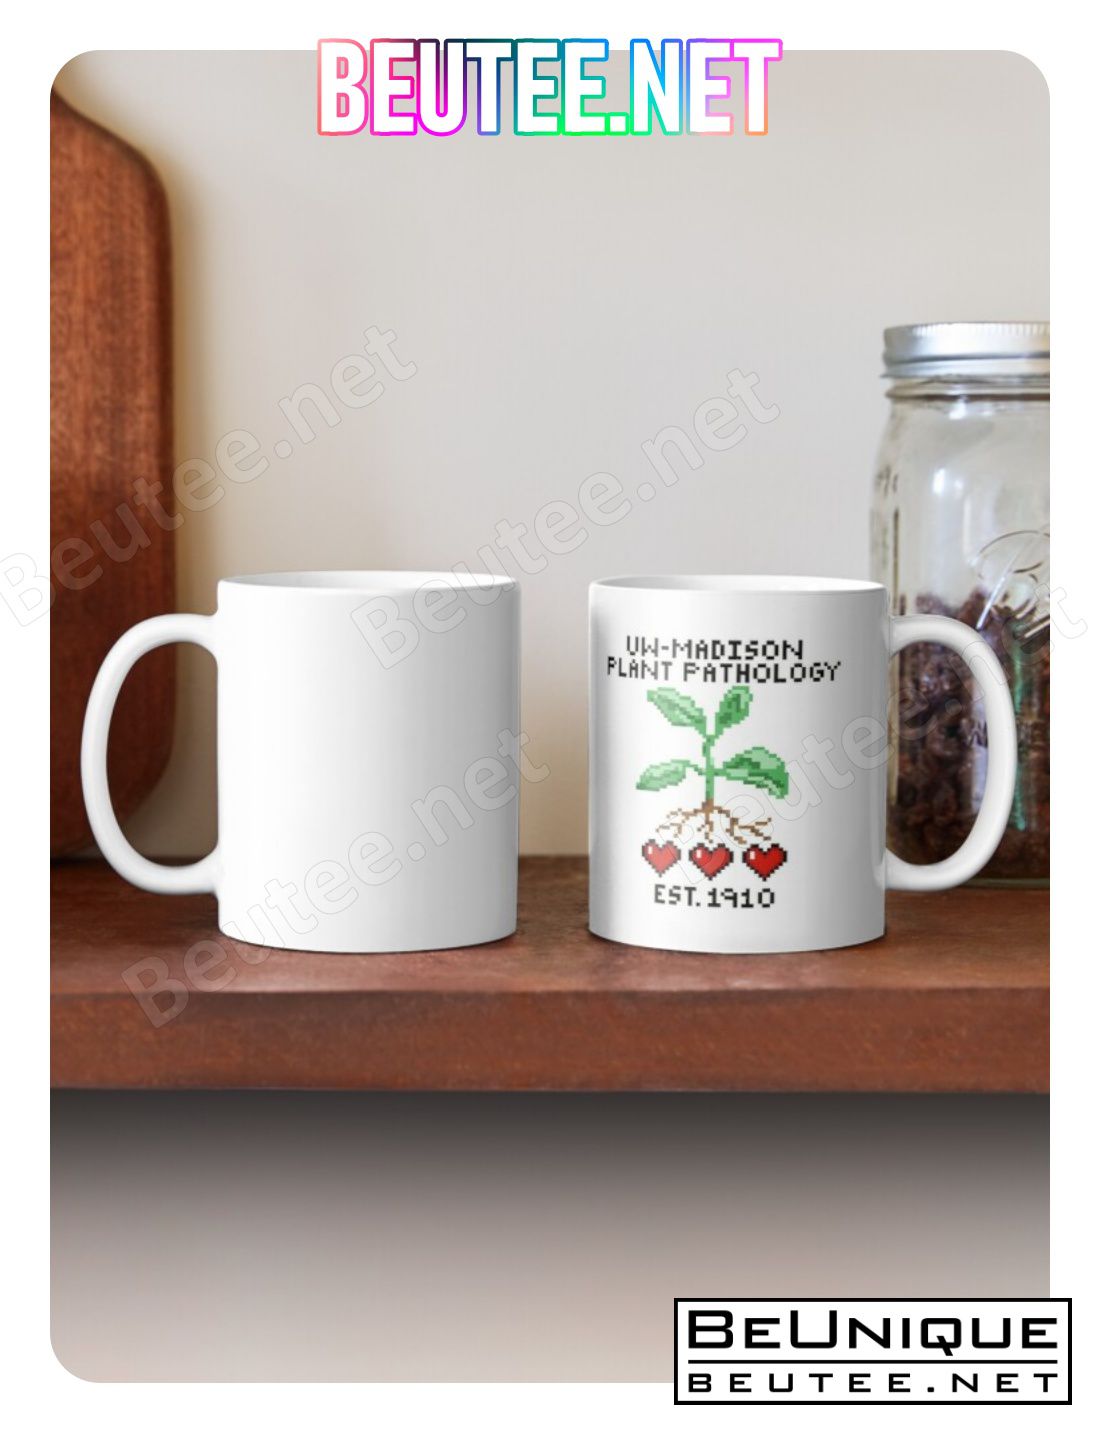 The Uw-plant Pathology Collection Coffee Mug